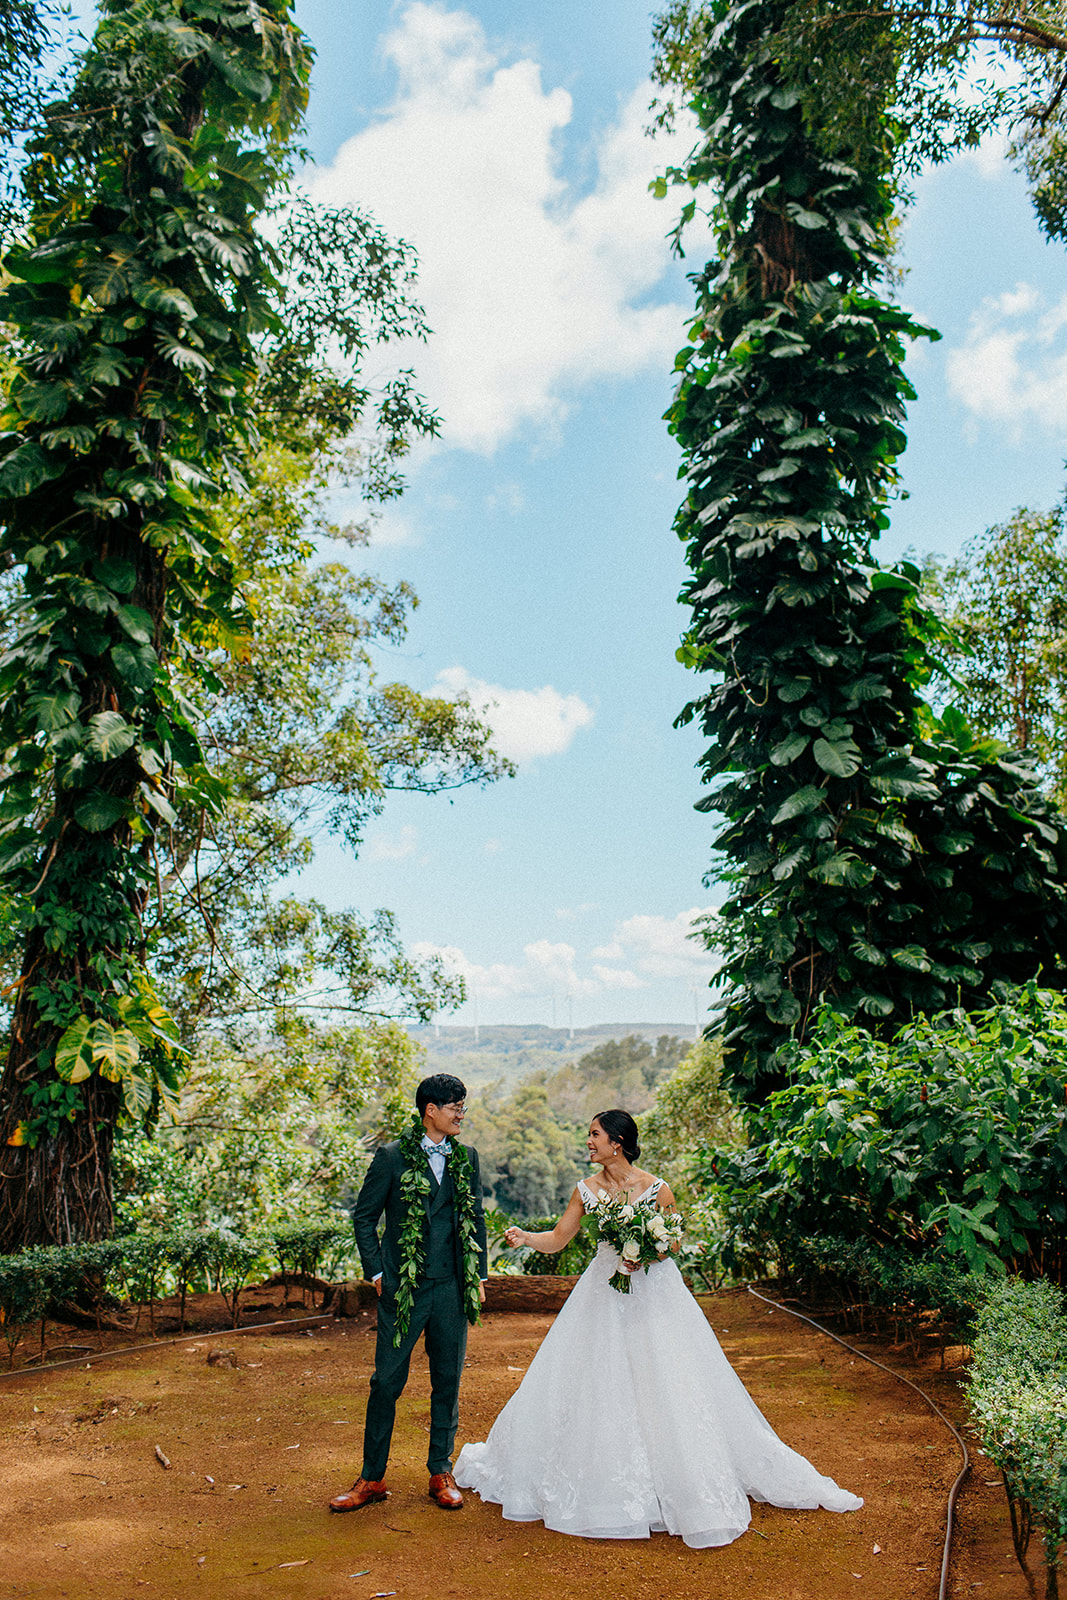 Epic and beautiful wedding portraits on top of Waimea Bay at Hawaii's Sunset Ranch